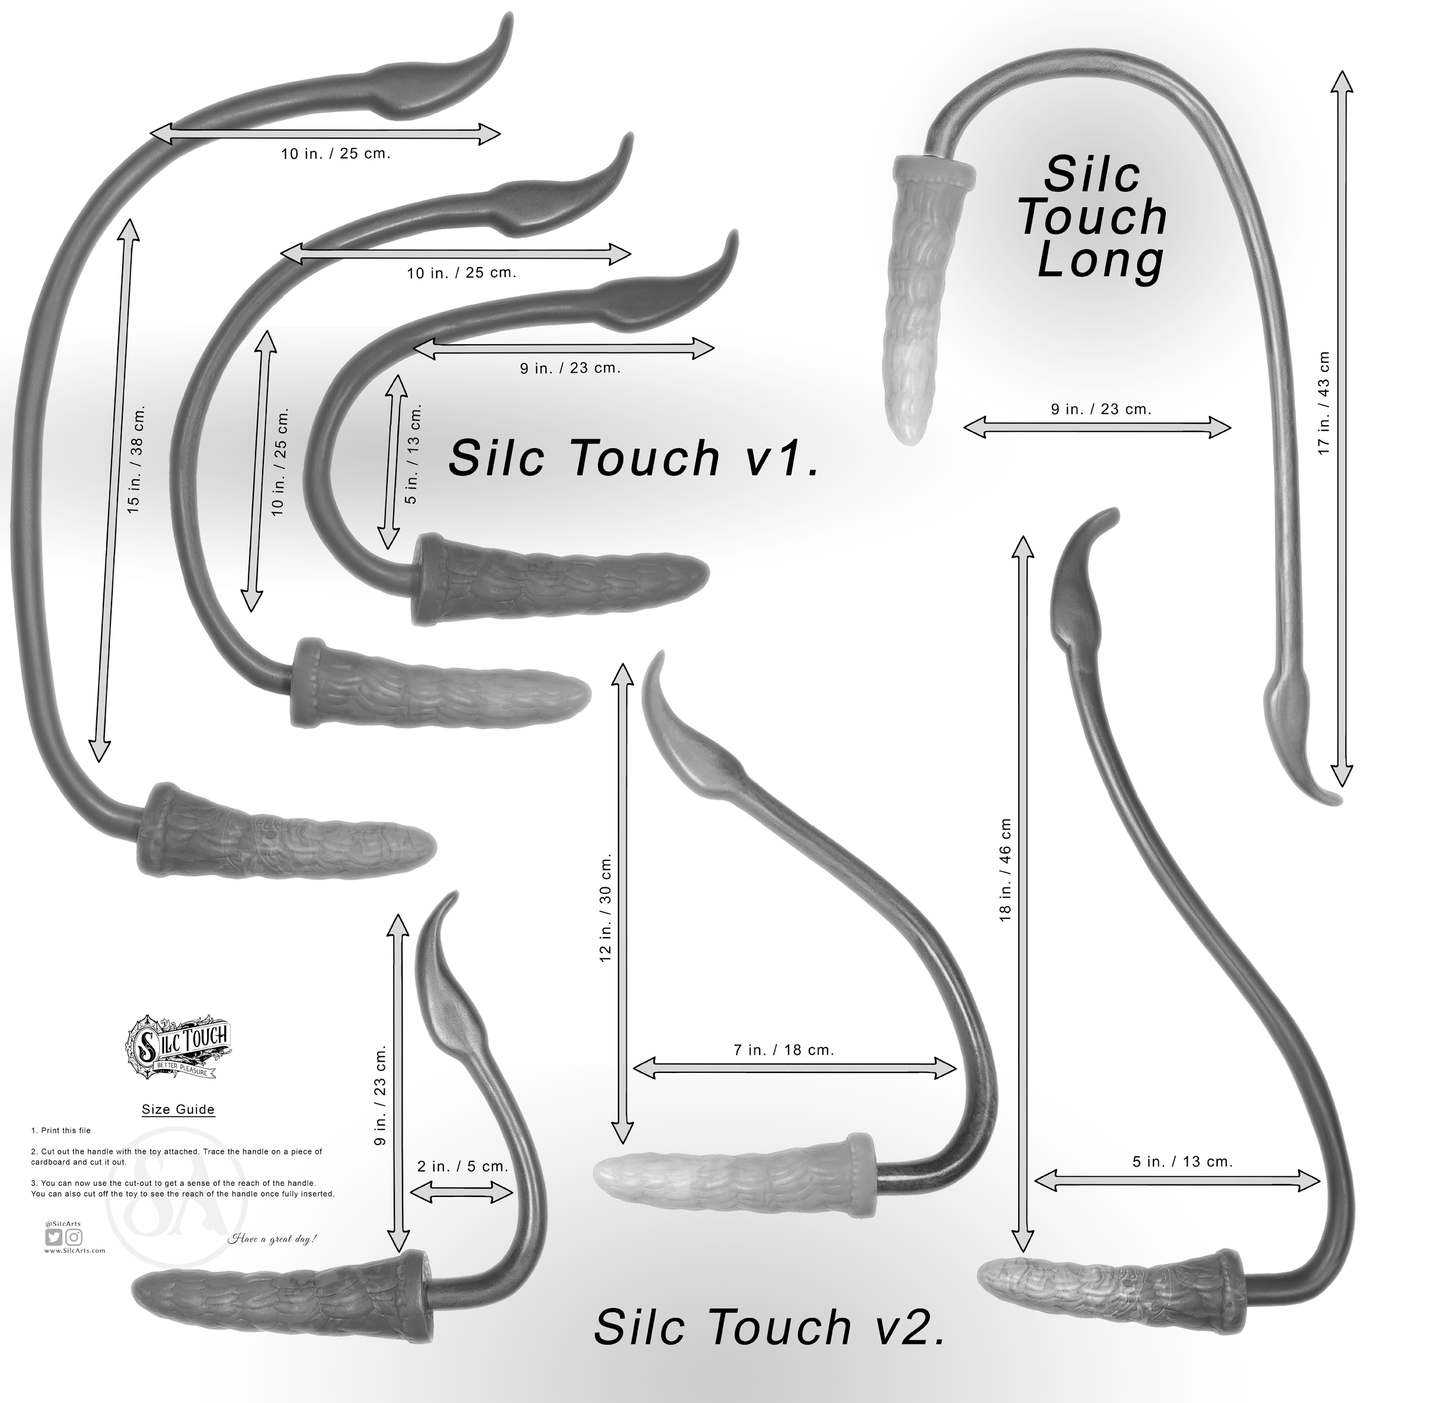 Silc Touch v2. - Ergonomic handle - VacLoc - Lg